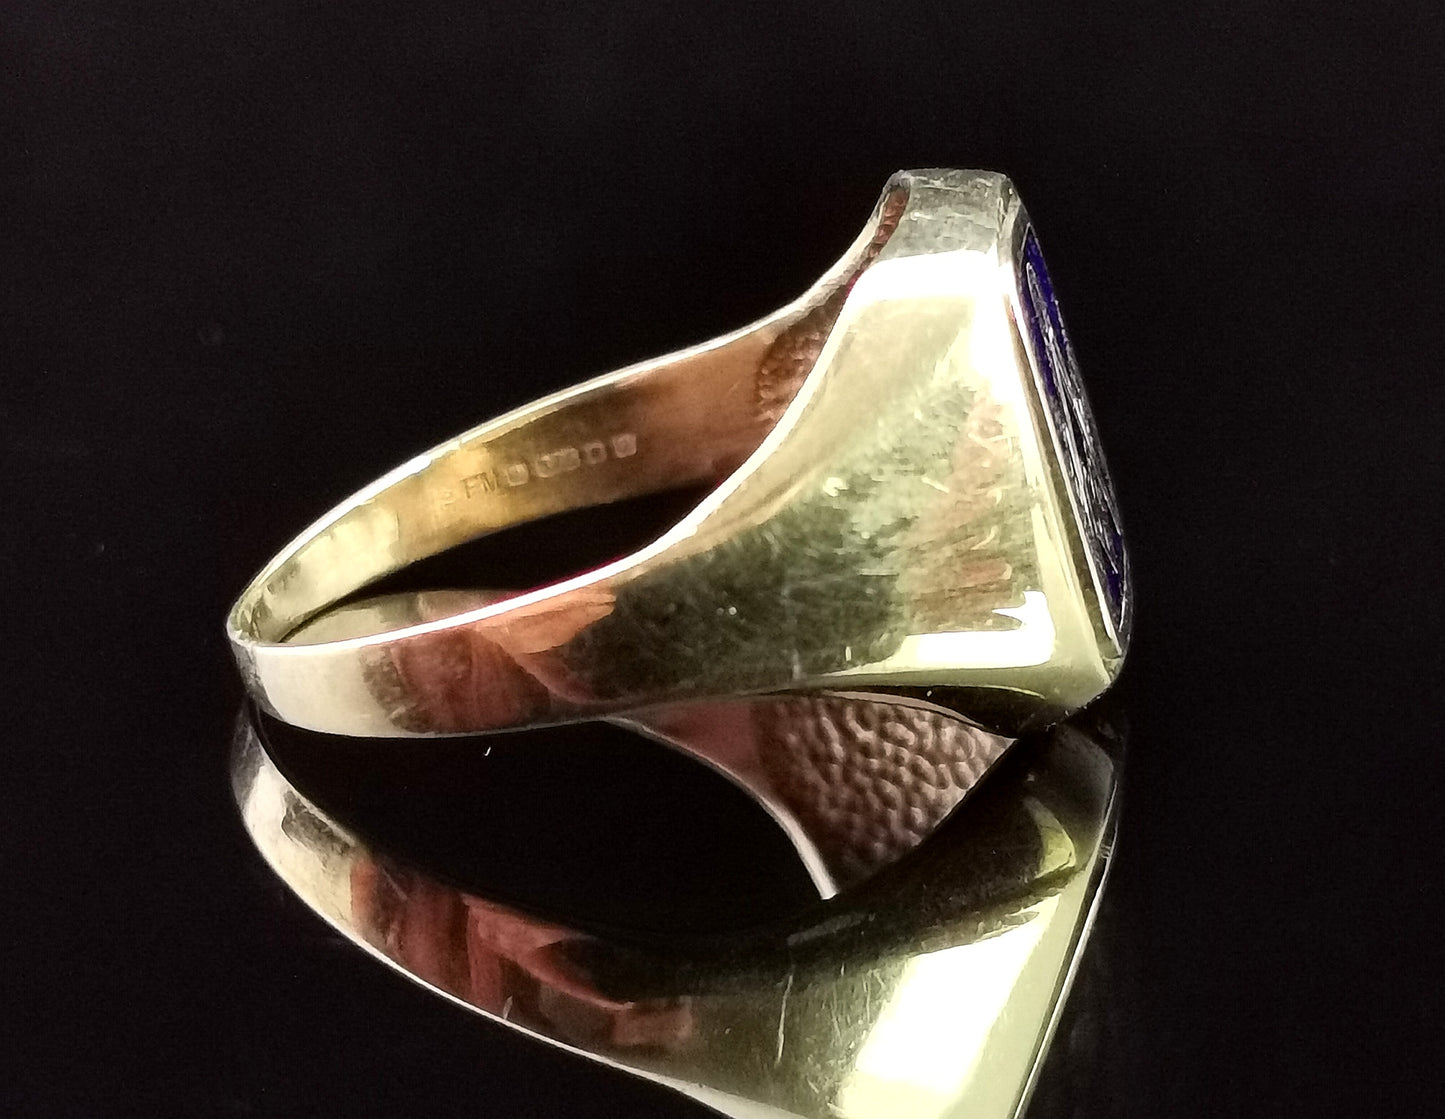 Vintage 9ct gold Masonic swivel ring, signet, blue enamel